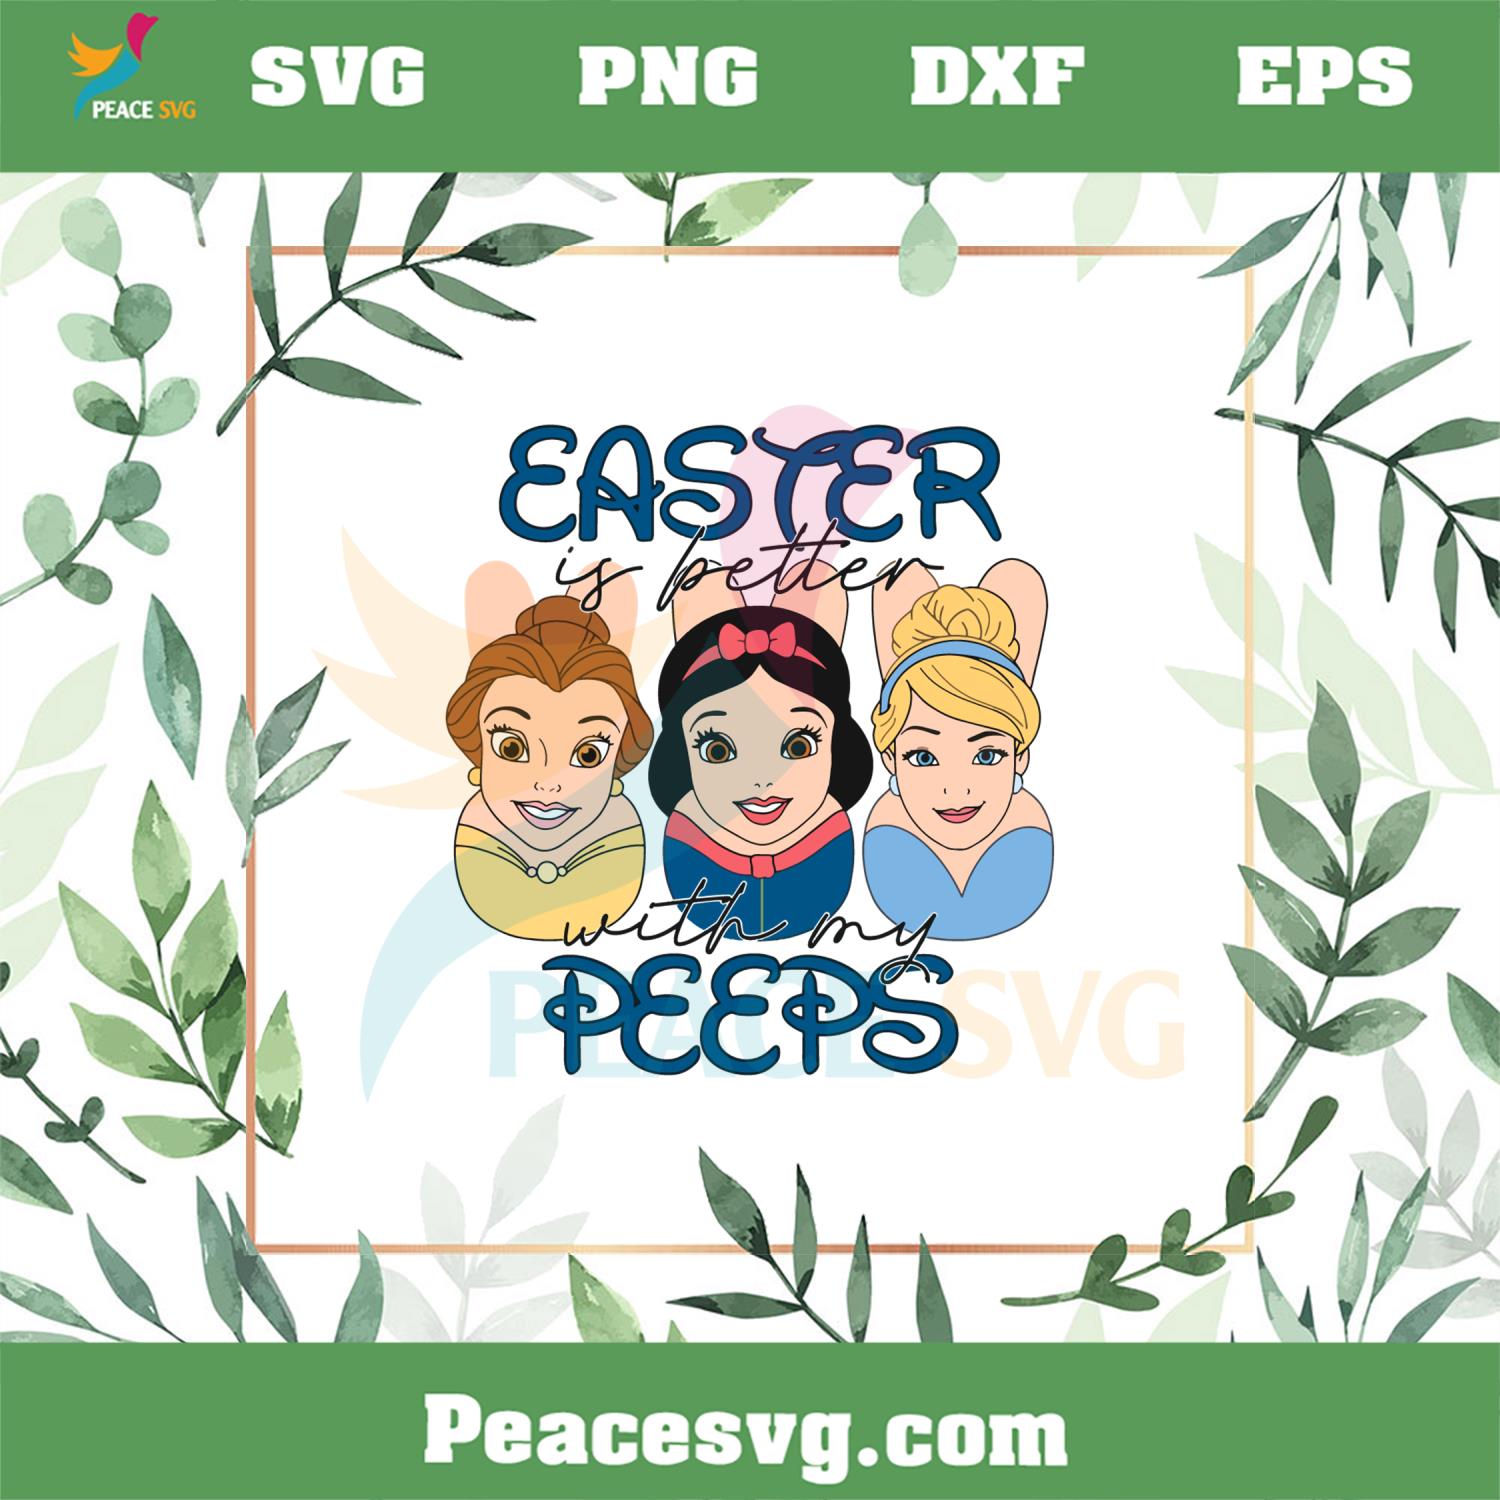 Easter Is Better With My Peeps SVG Disney Princess Easter Peeps SVG